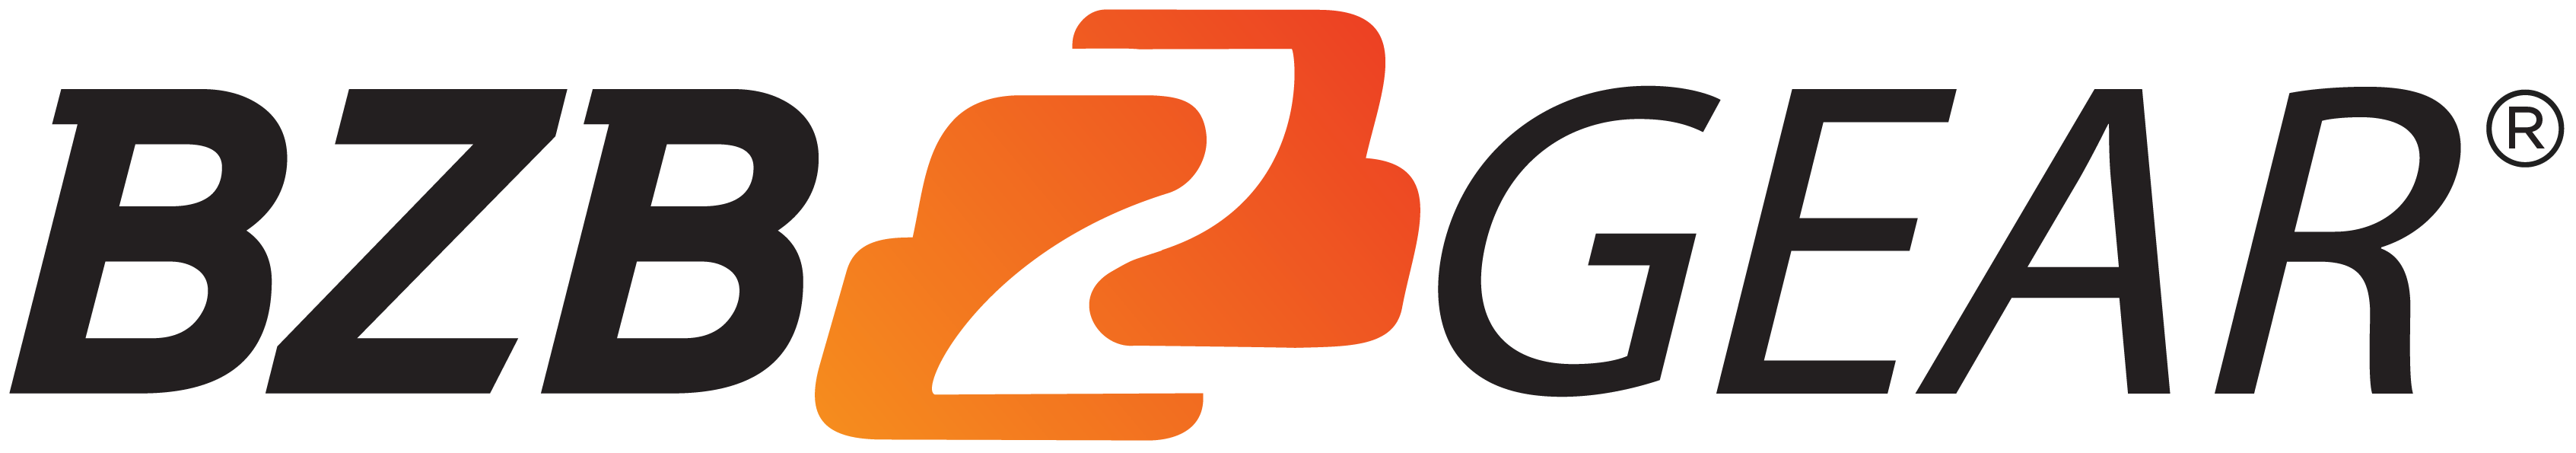 BZBGEAR logo - PRIMARY (black) - transparent (1)